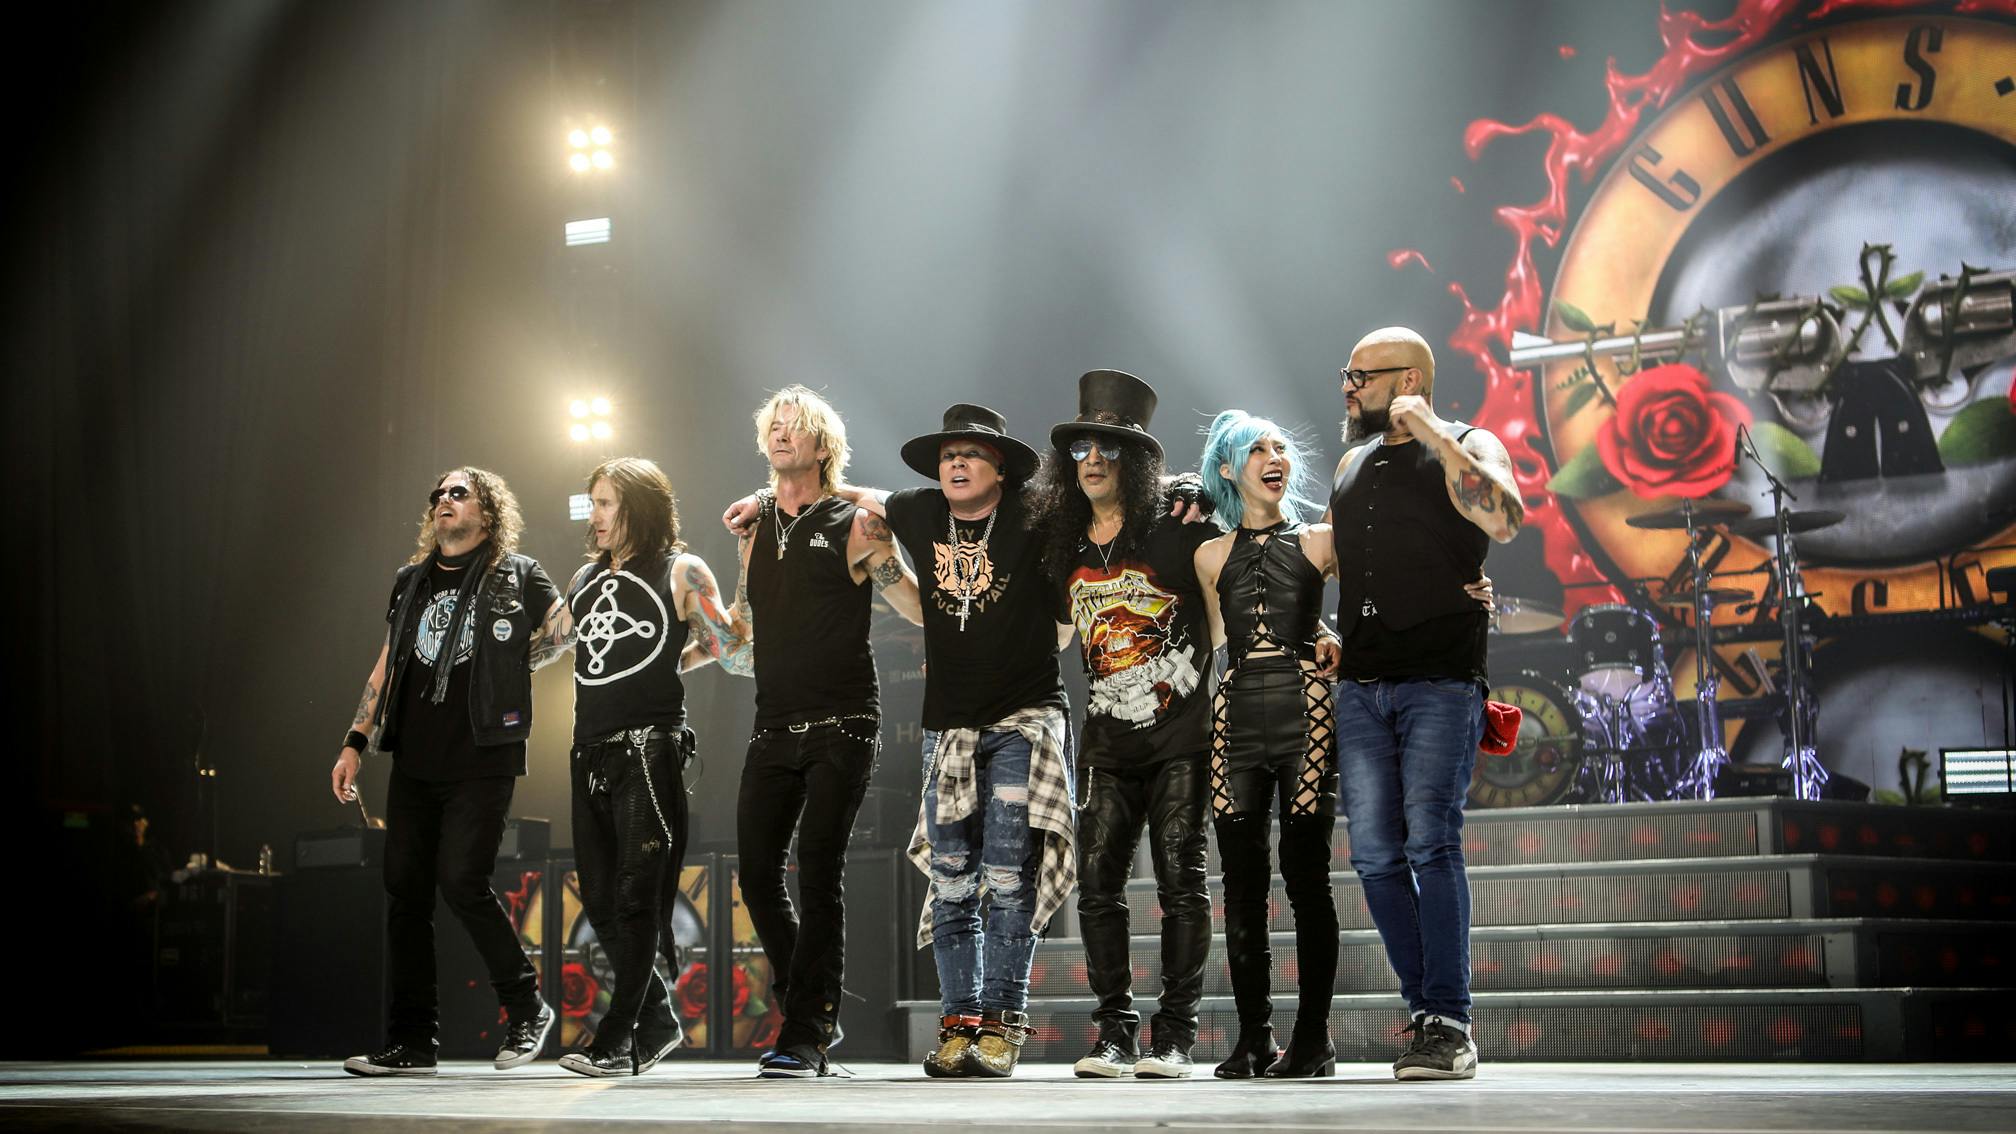 Guns N’ Roses postpone Glasgow gig due to “illness and medical advice”